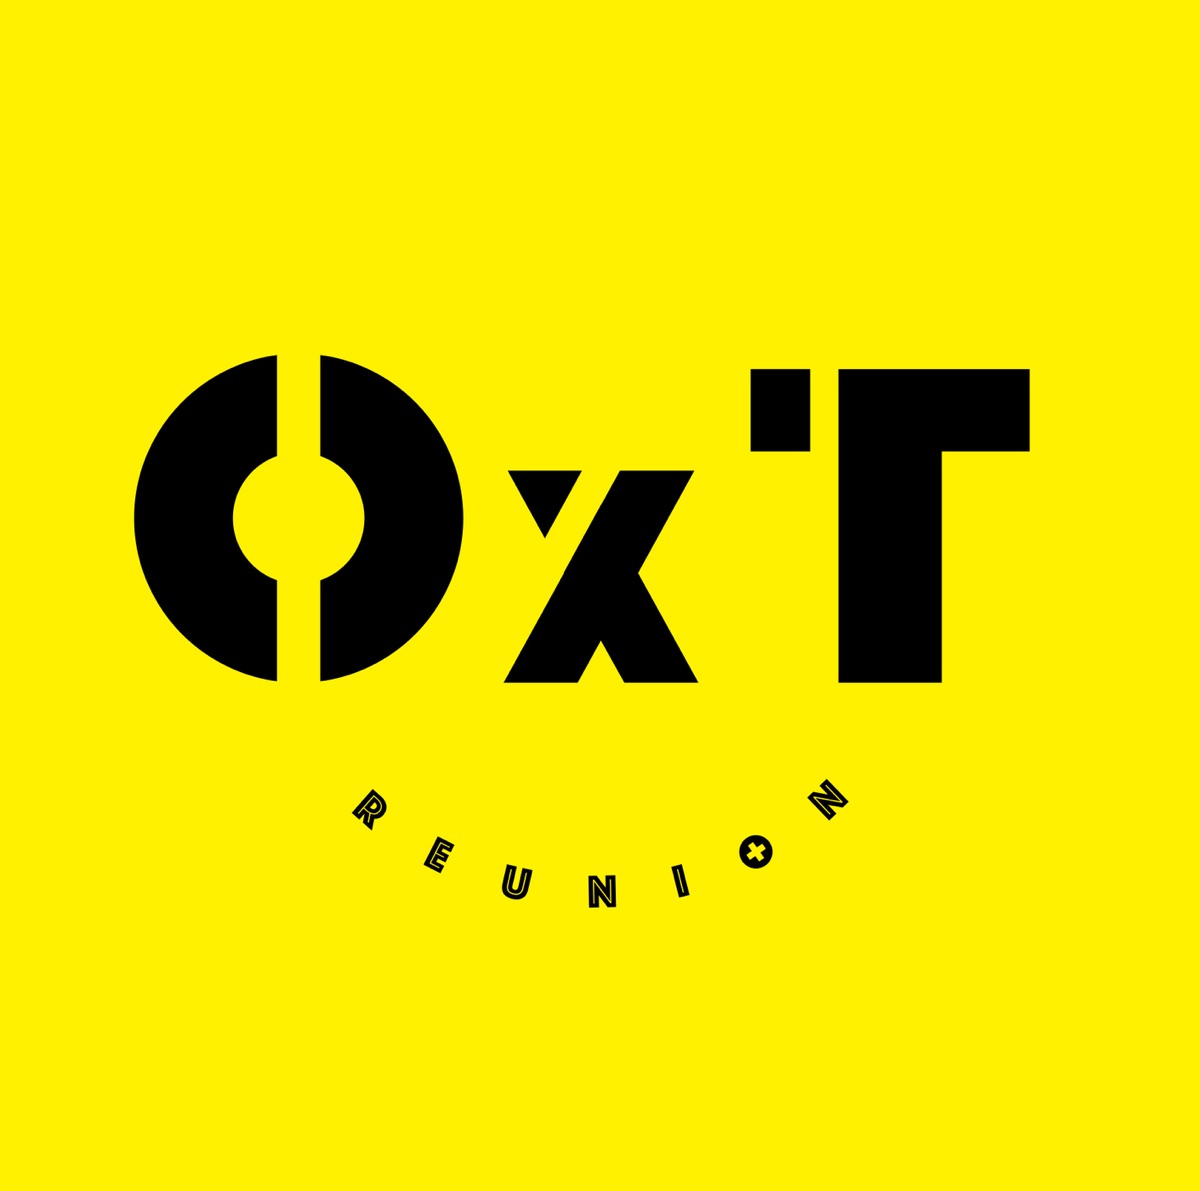 『OxT - 鼓動エスカレーション(OxT ver.) 歌詞』収録の『REUNION』ジャケット